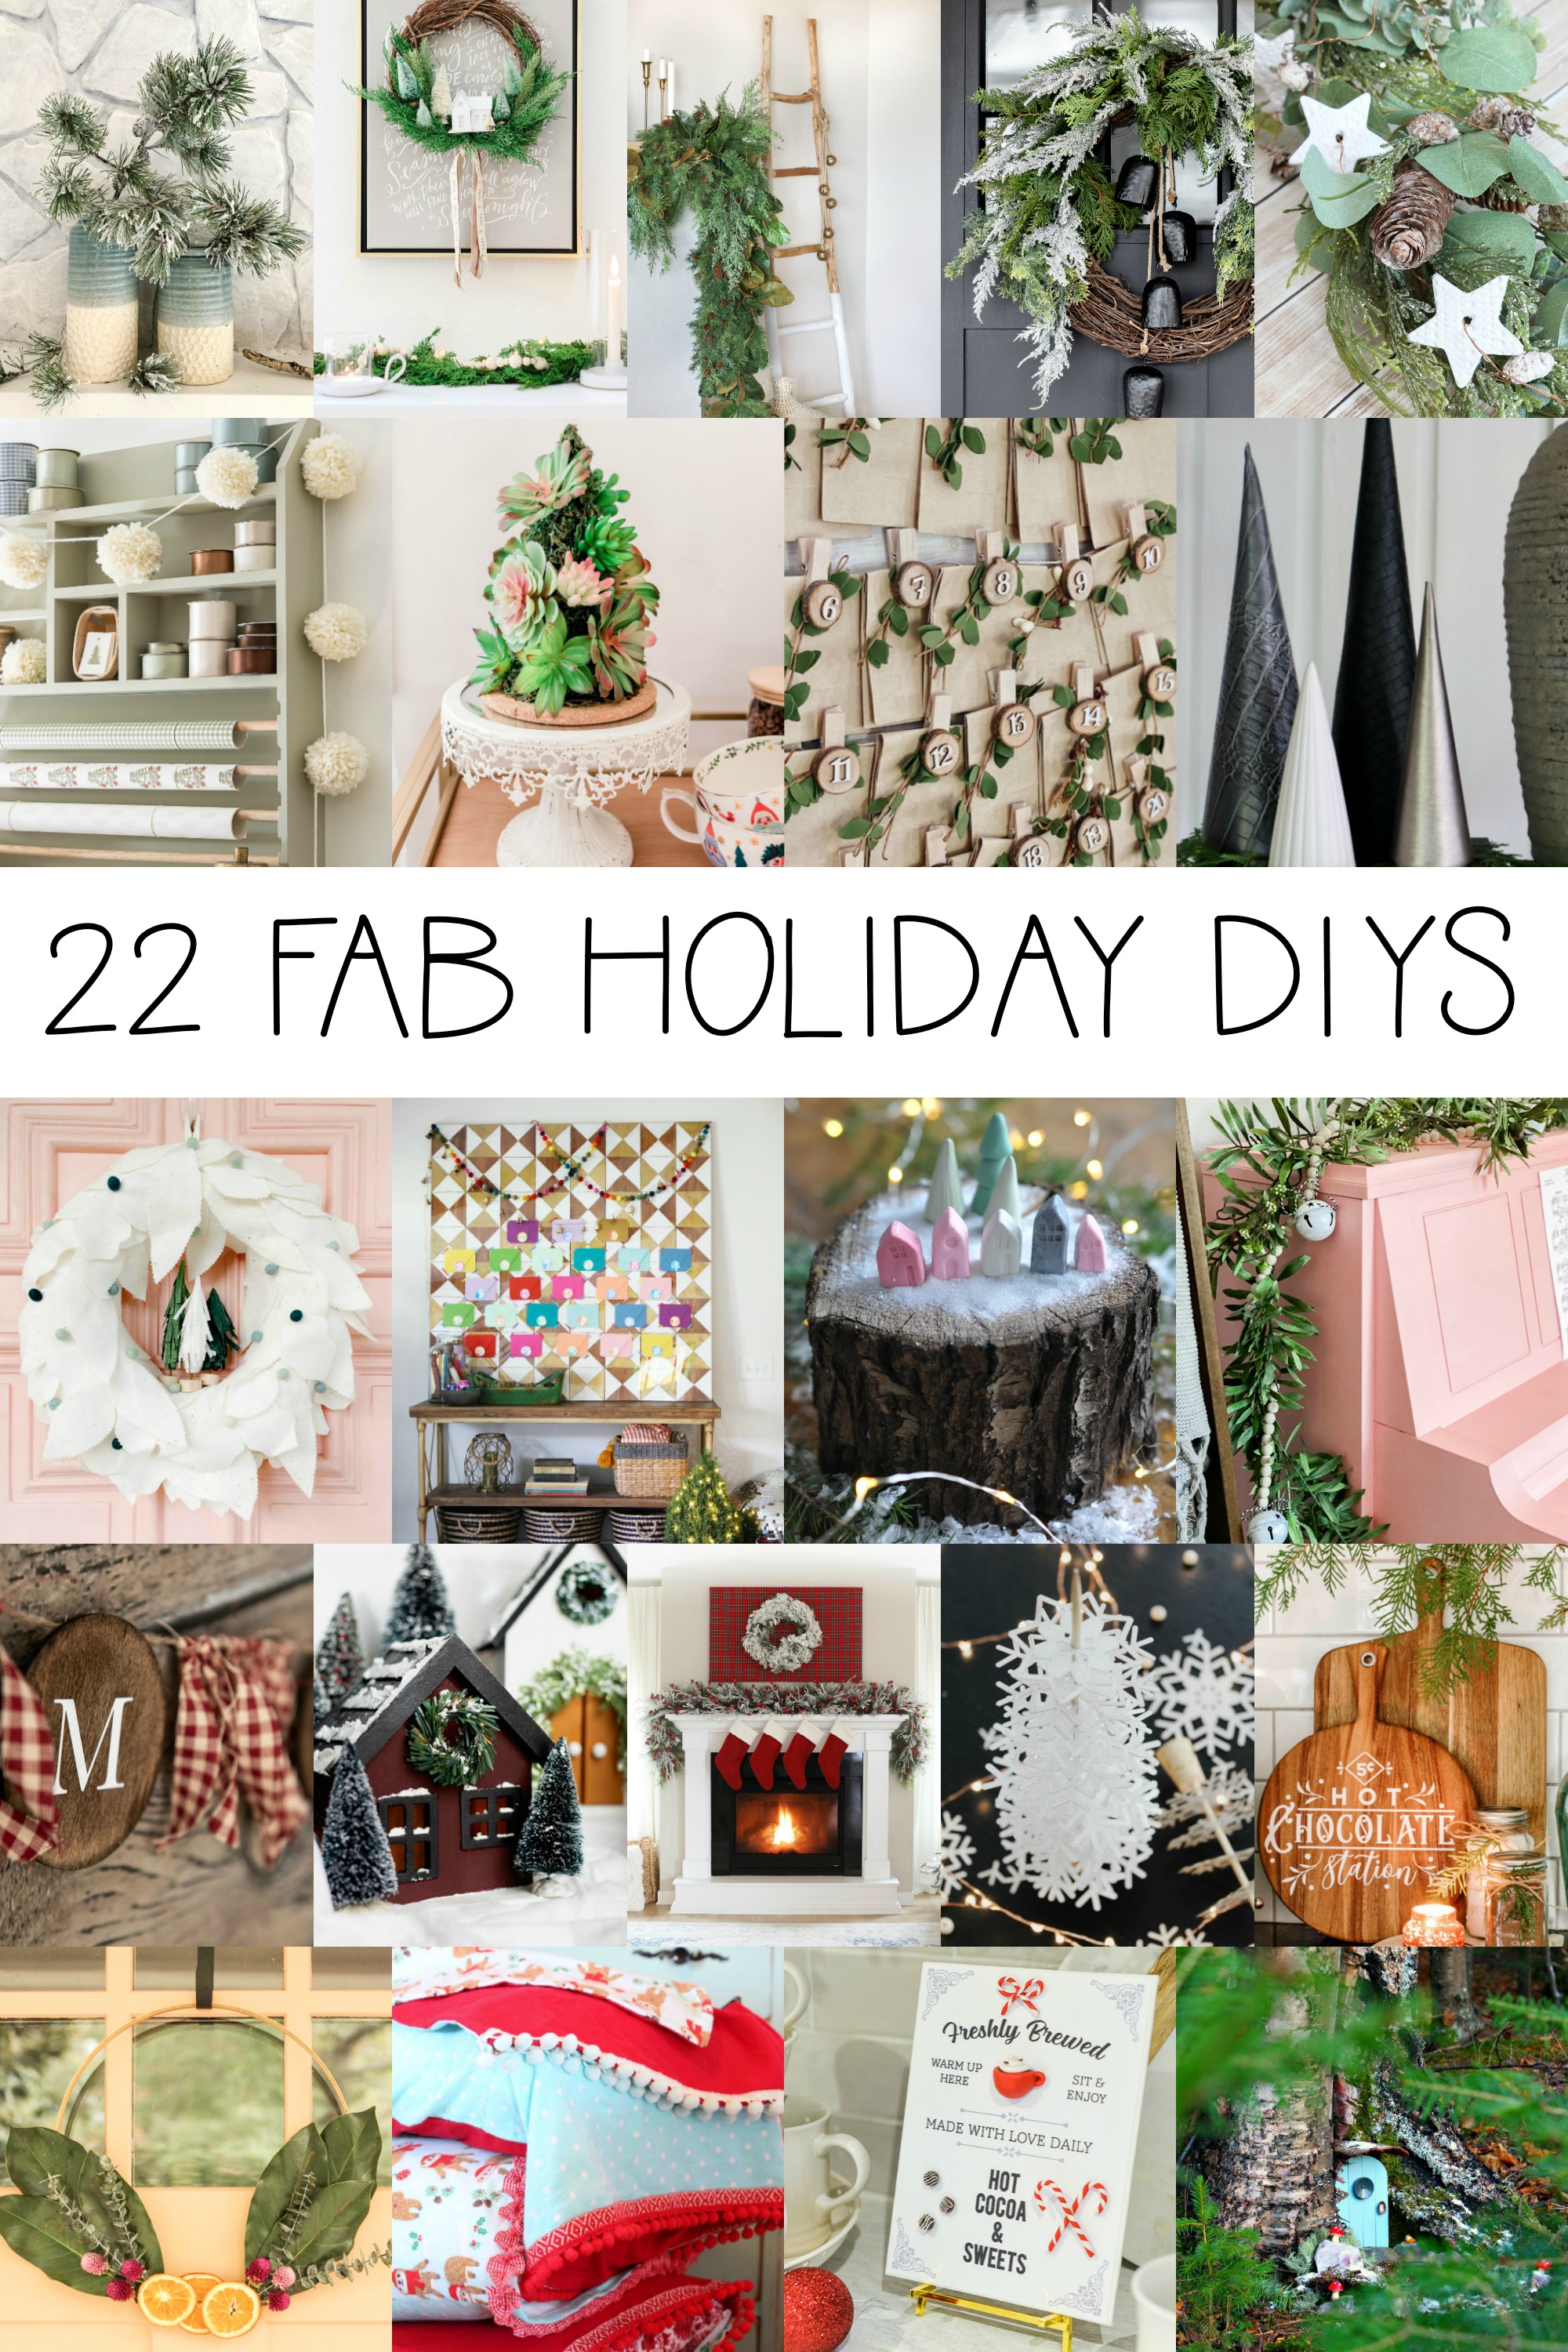 22 Fab Holiday DIYS poster.